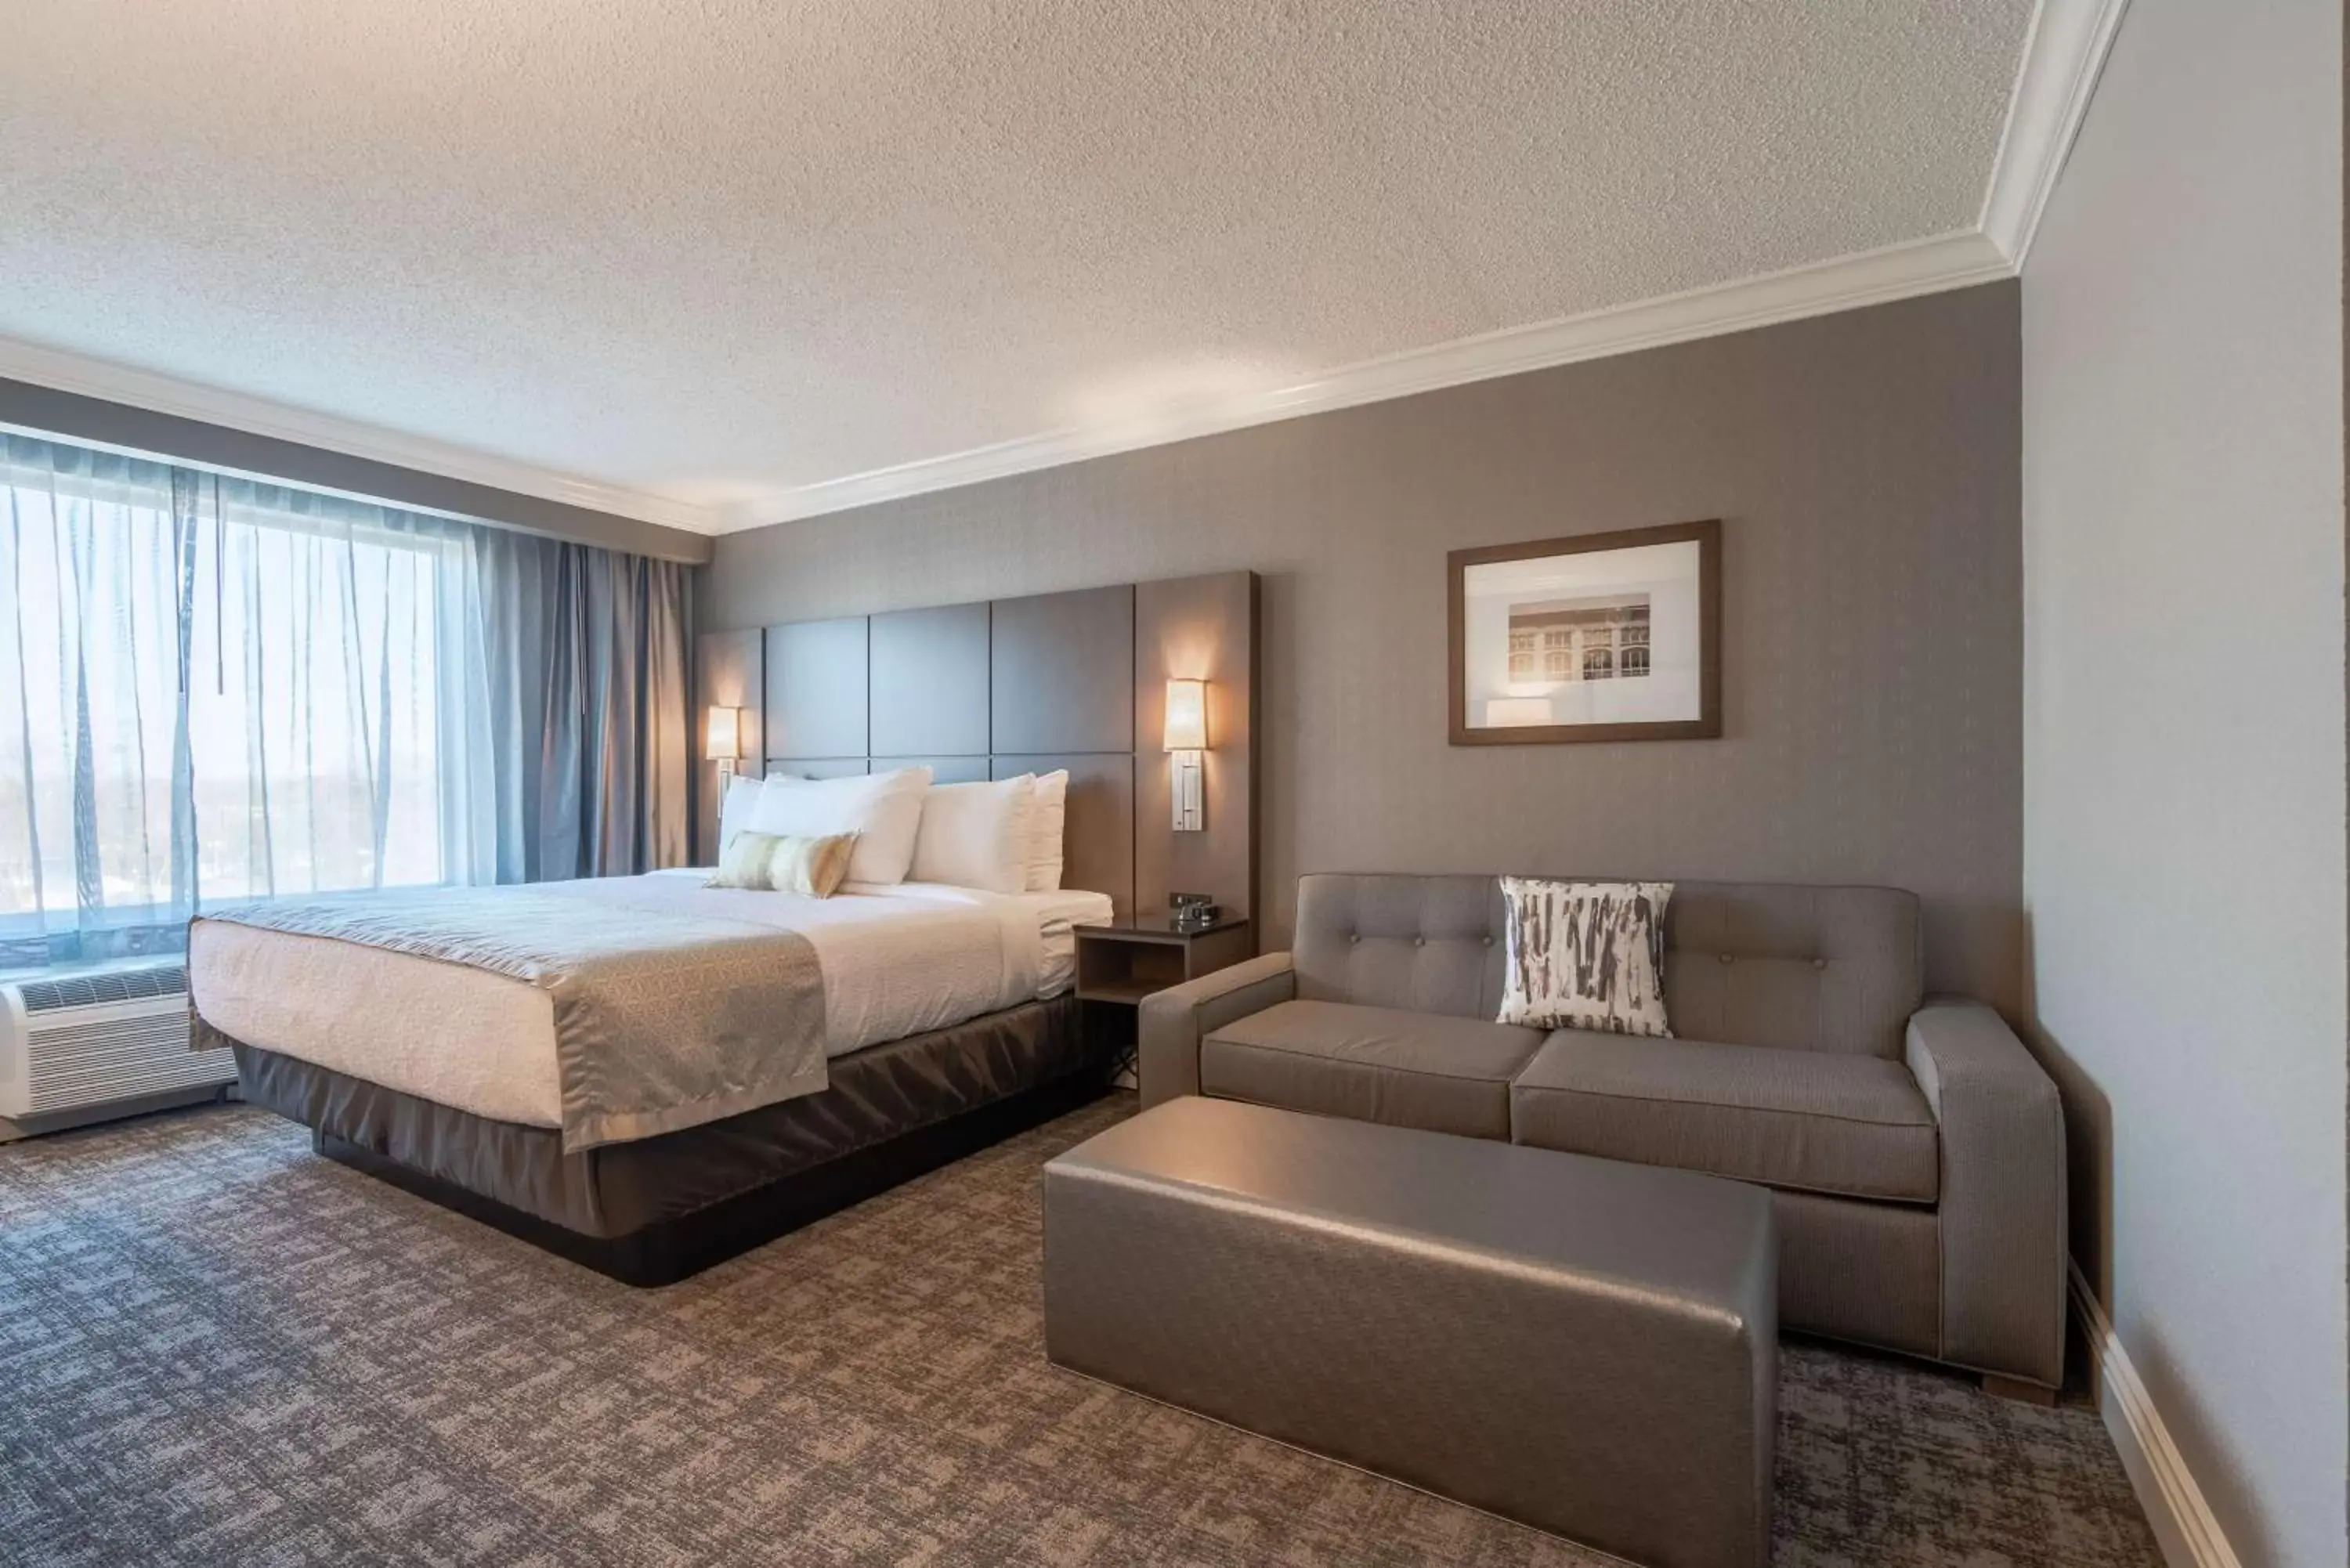 Bedroom in Best Western Premier Airport/Expo Center Hotel